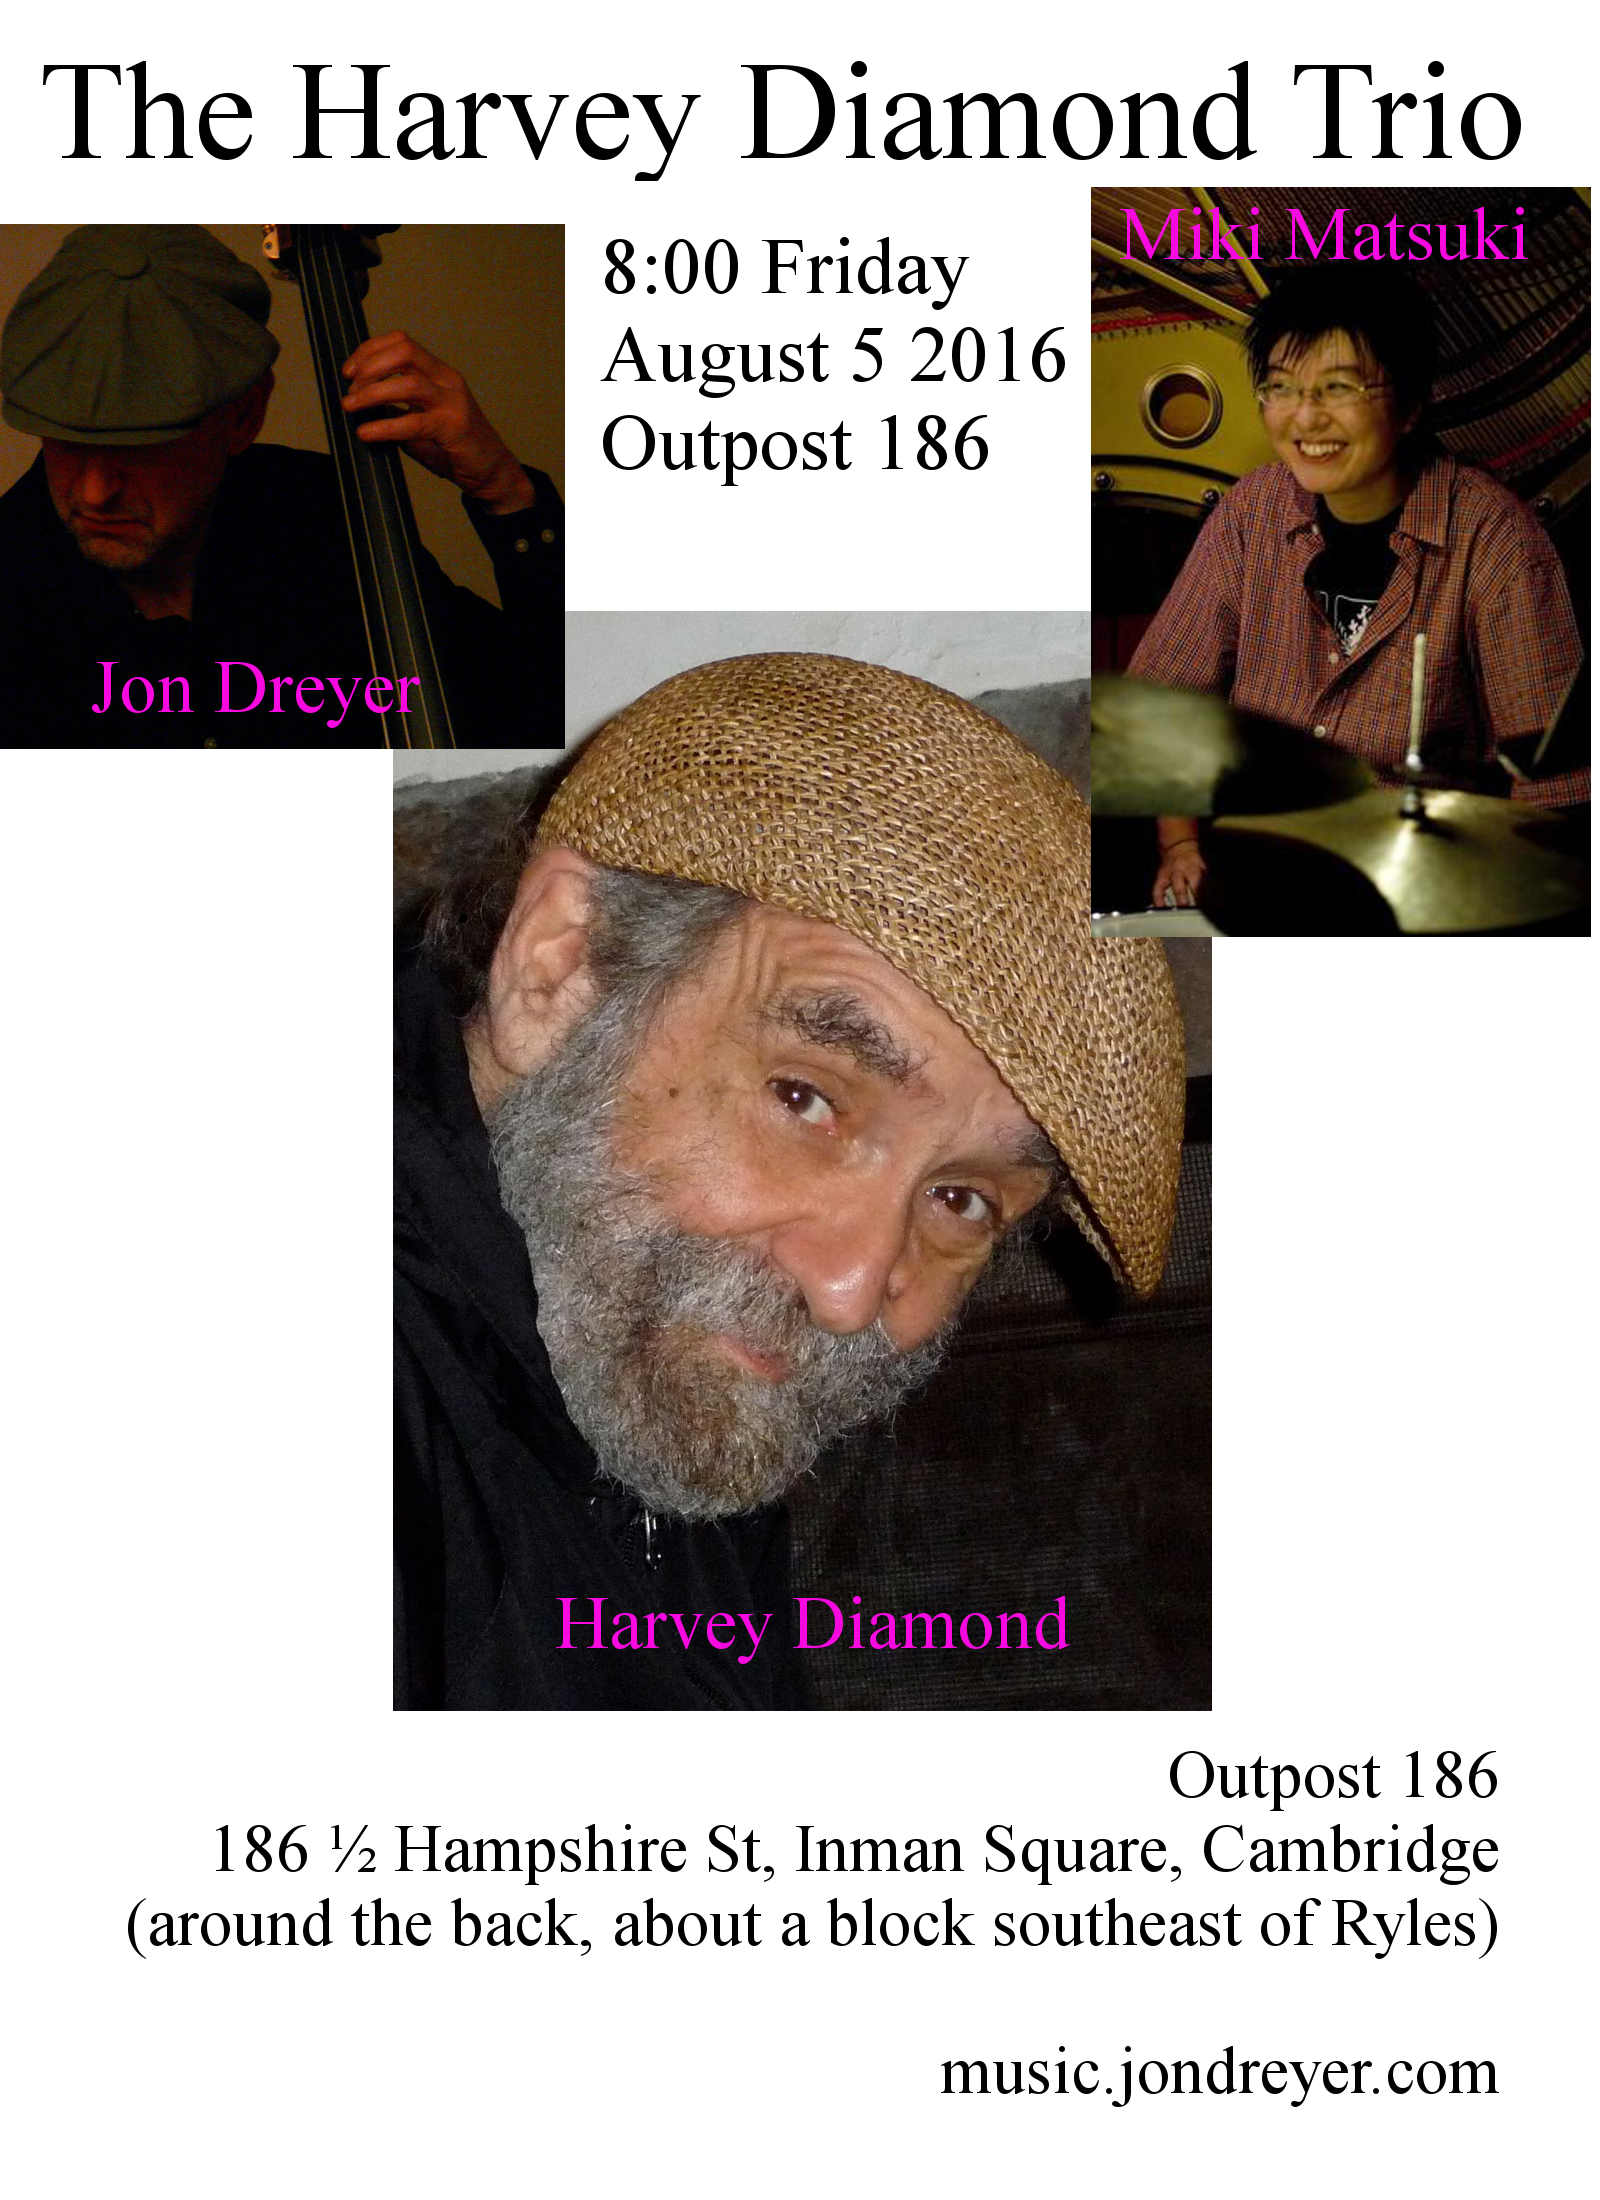 Harvey Diamond Trio Poster, August 5 2016